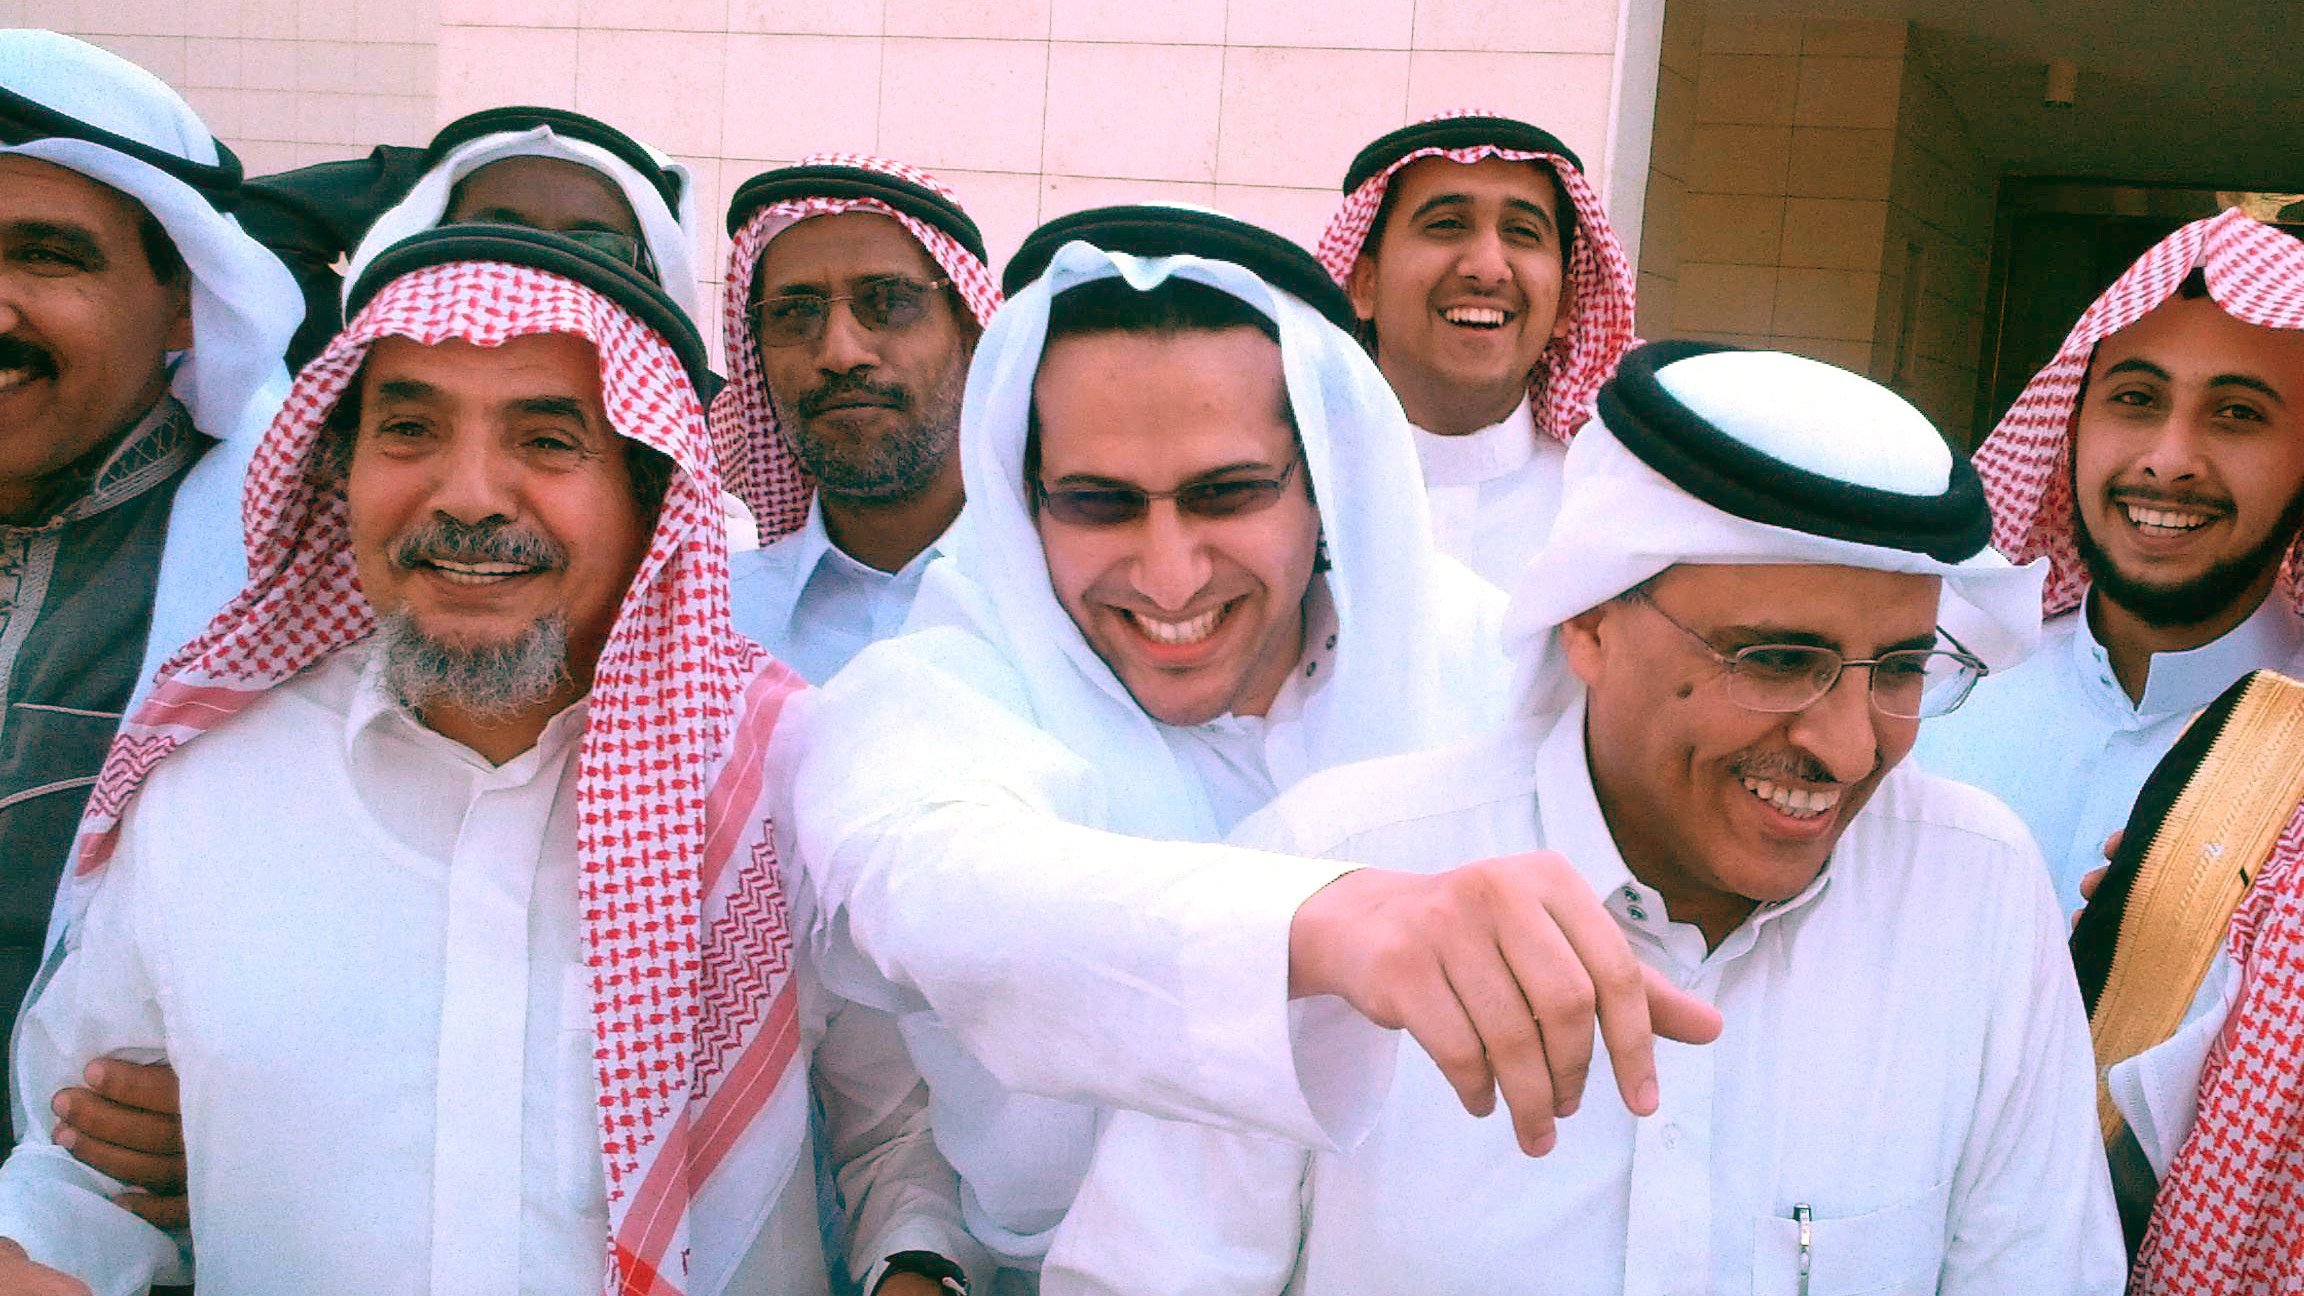 Abdullah al-Hamid (L),  Waleed Abu al-Khair (C) and Mohammad al-Qahtani (R) after a trial hearing session in the case against Hasm in Riyadh, Saudi Arabia on 24 November 2012 (Wikimedia Commons) 